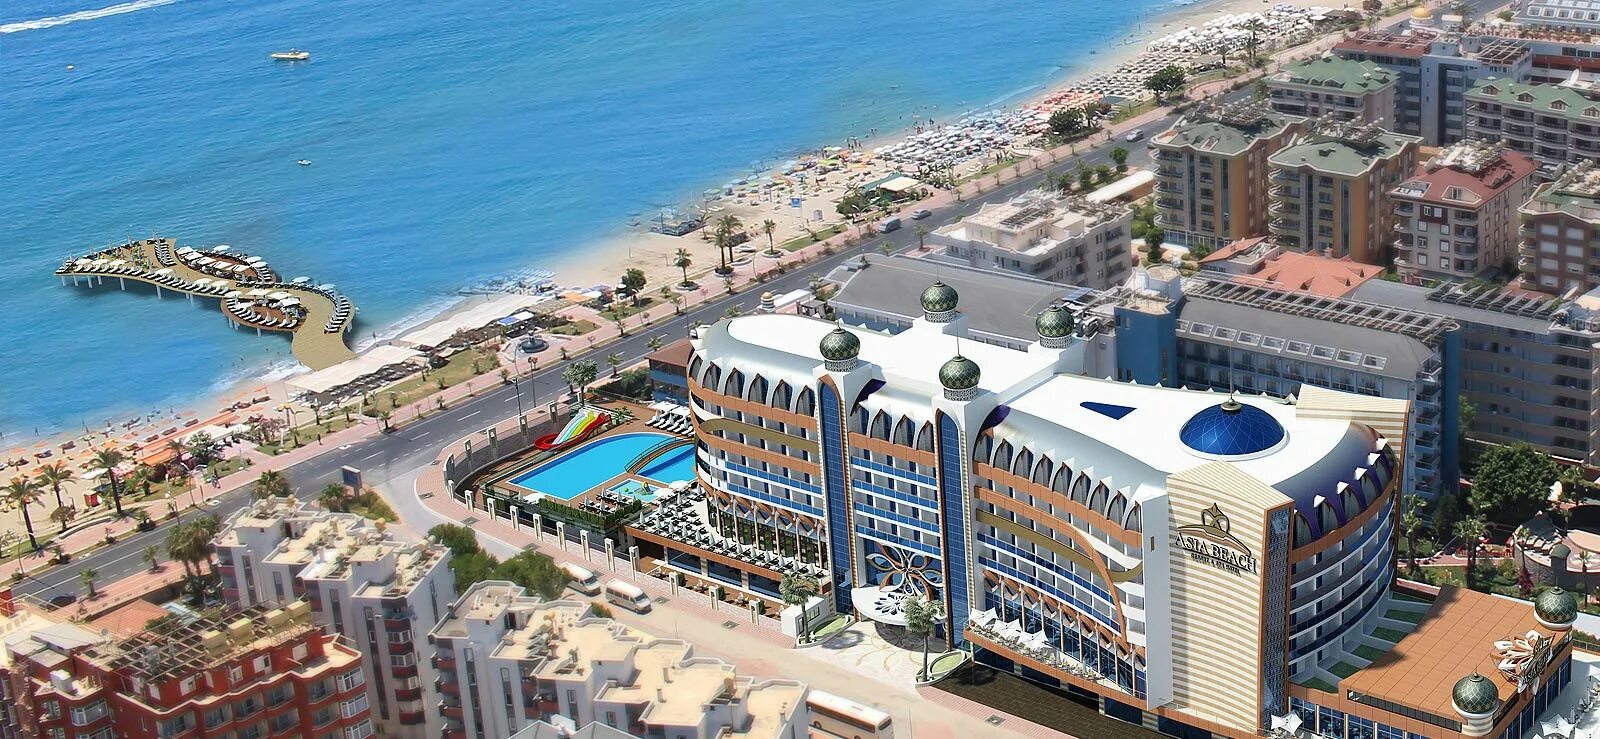 Asia Beach Resort Spa 5 Турция Алания. Отель Asia Beach Resort & Spa Hotel. Азия Бич Резорт Алания отель. Отель в Турции Азия Бич Резорт 5 звезд.